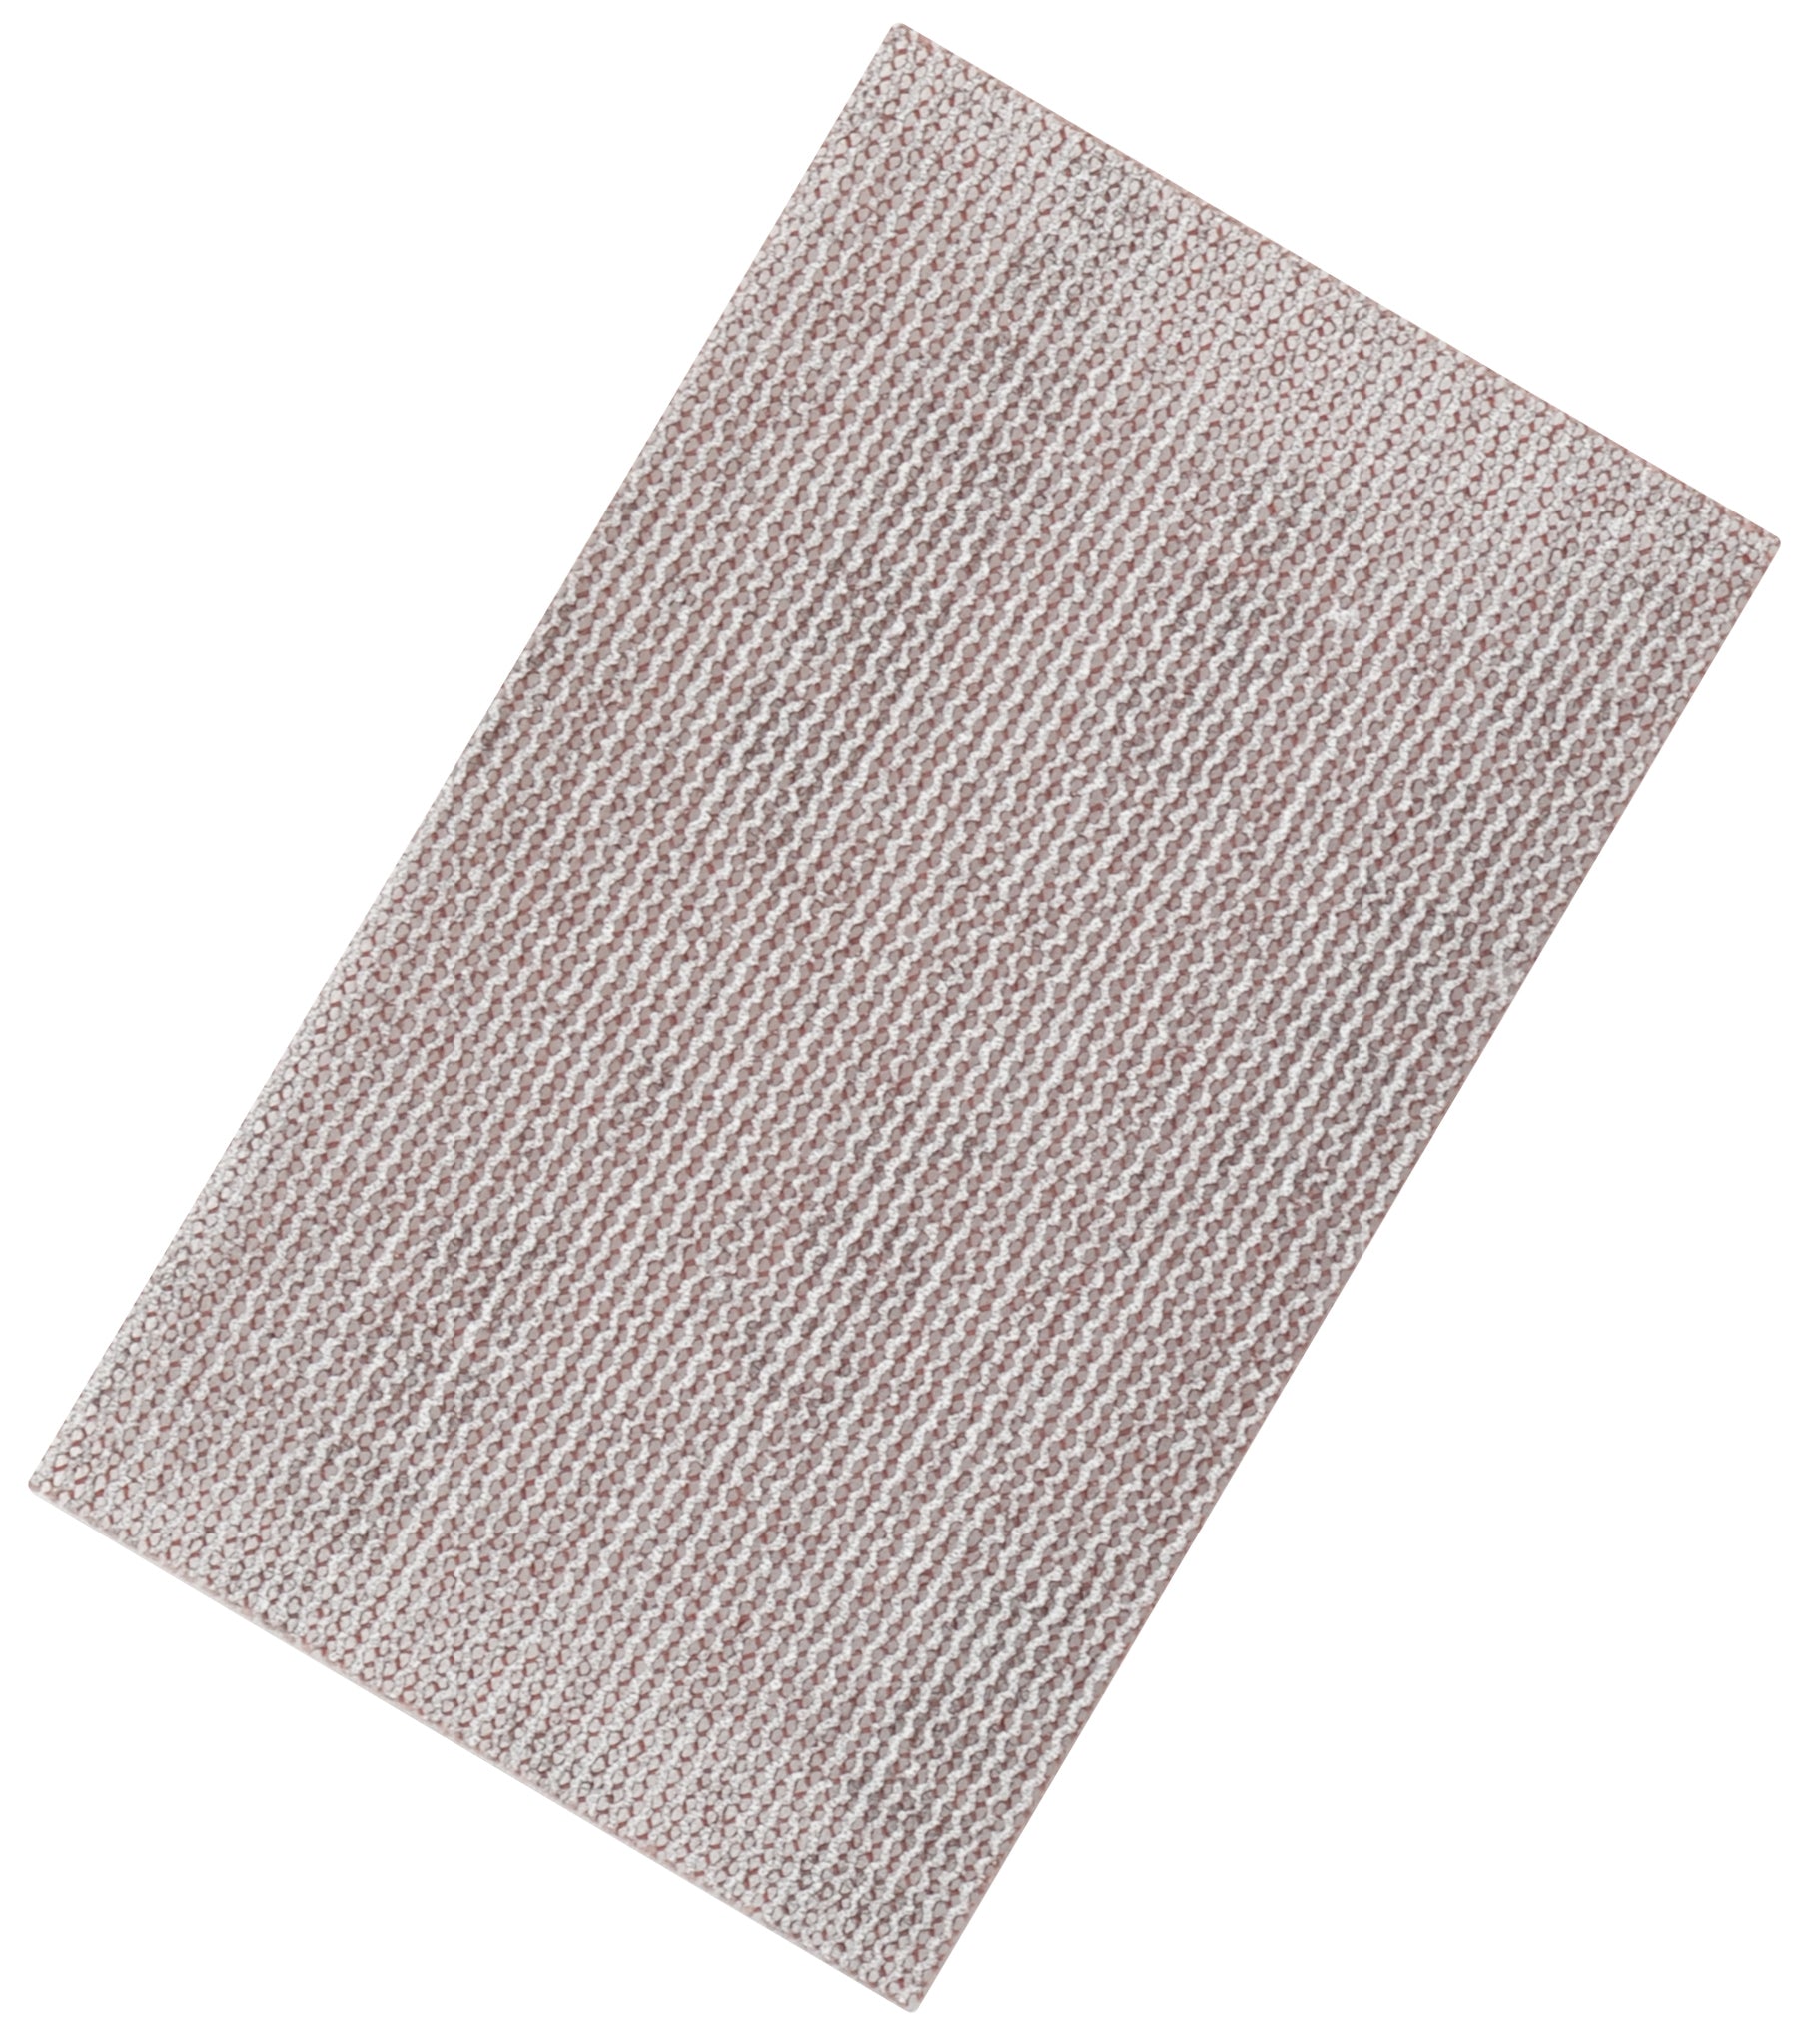 Mirka Abranet Hojas rectangulares con agarre de malla de 3" x 5"